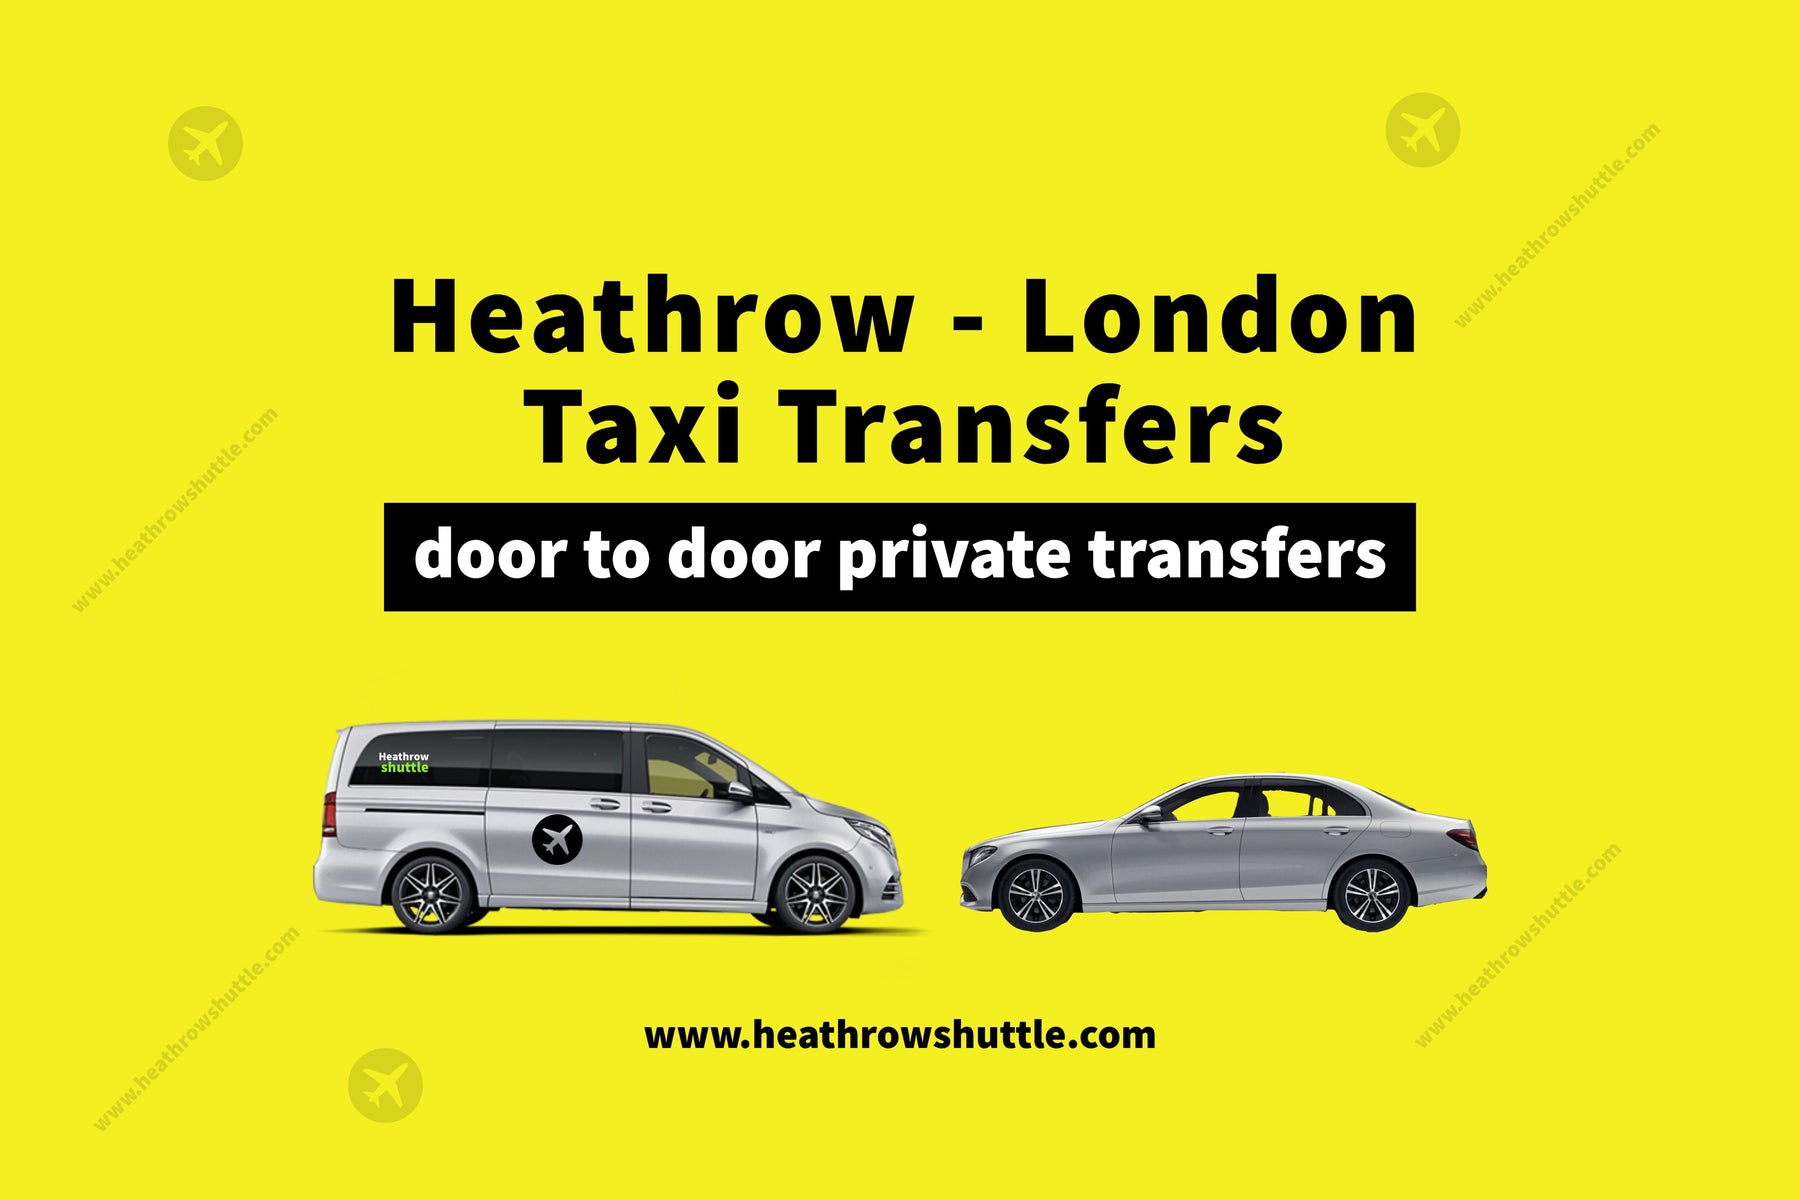 London Taxi Transfers